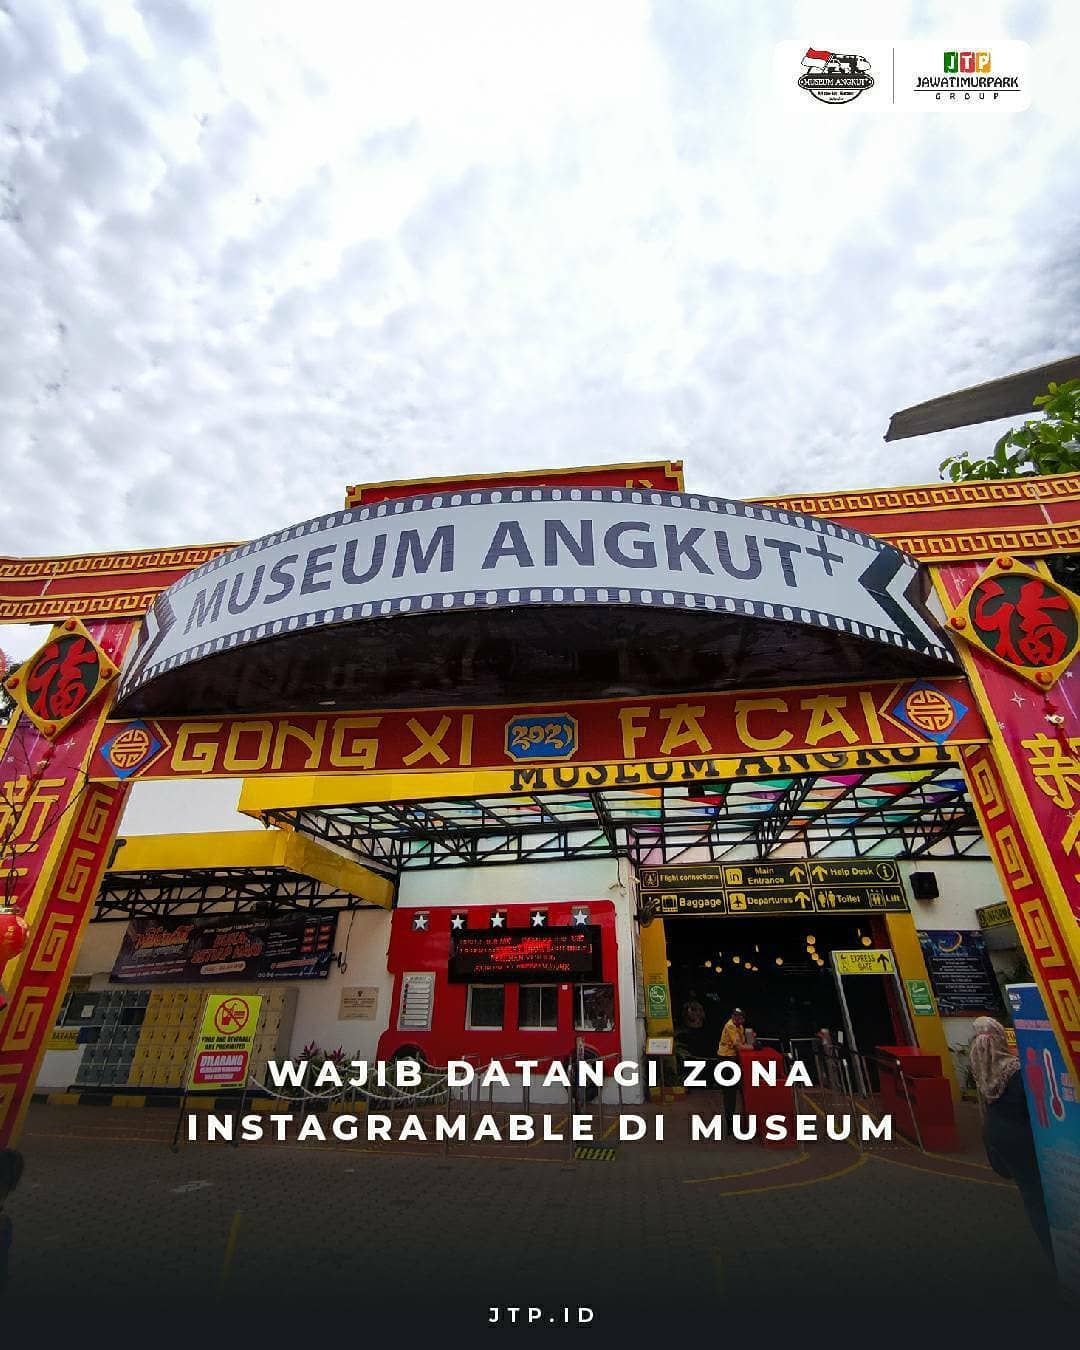 Museum Angkut menjadi salah satu tujuan wisata yang wajib kamu datangi di Malang.